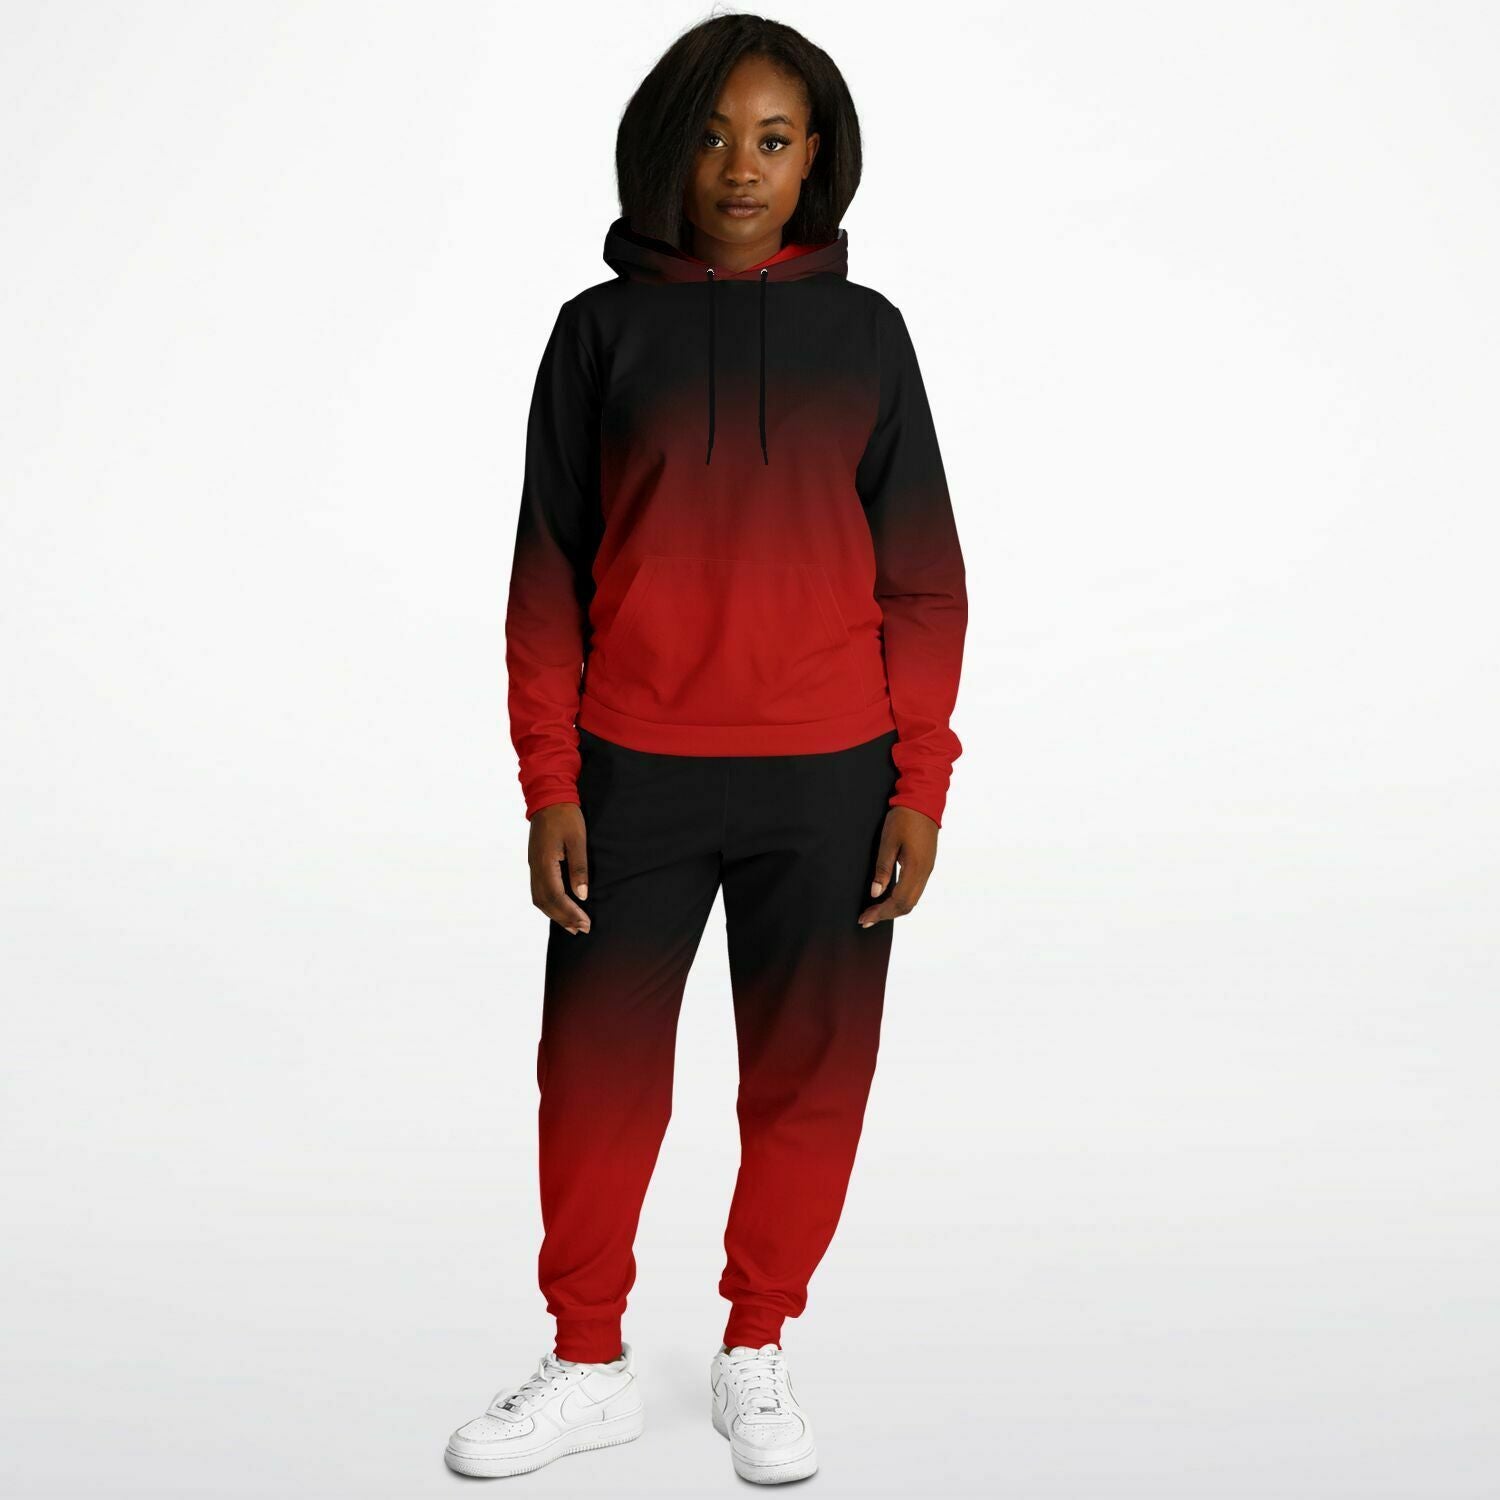 Black Red Ombre Hoodie Jogger Sweatsuit Set, Tie Dye Lounge Hooded